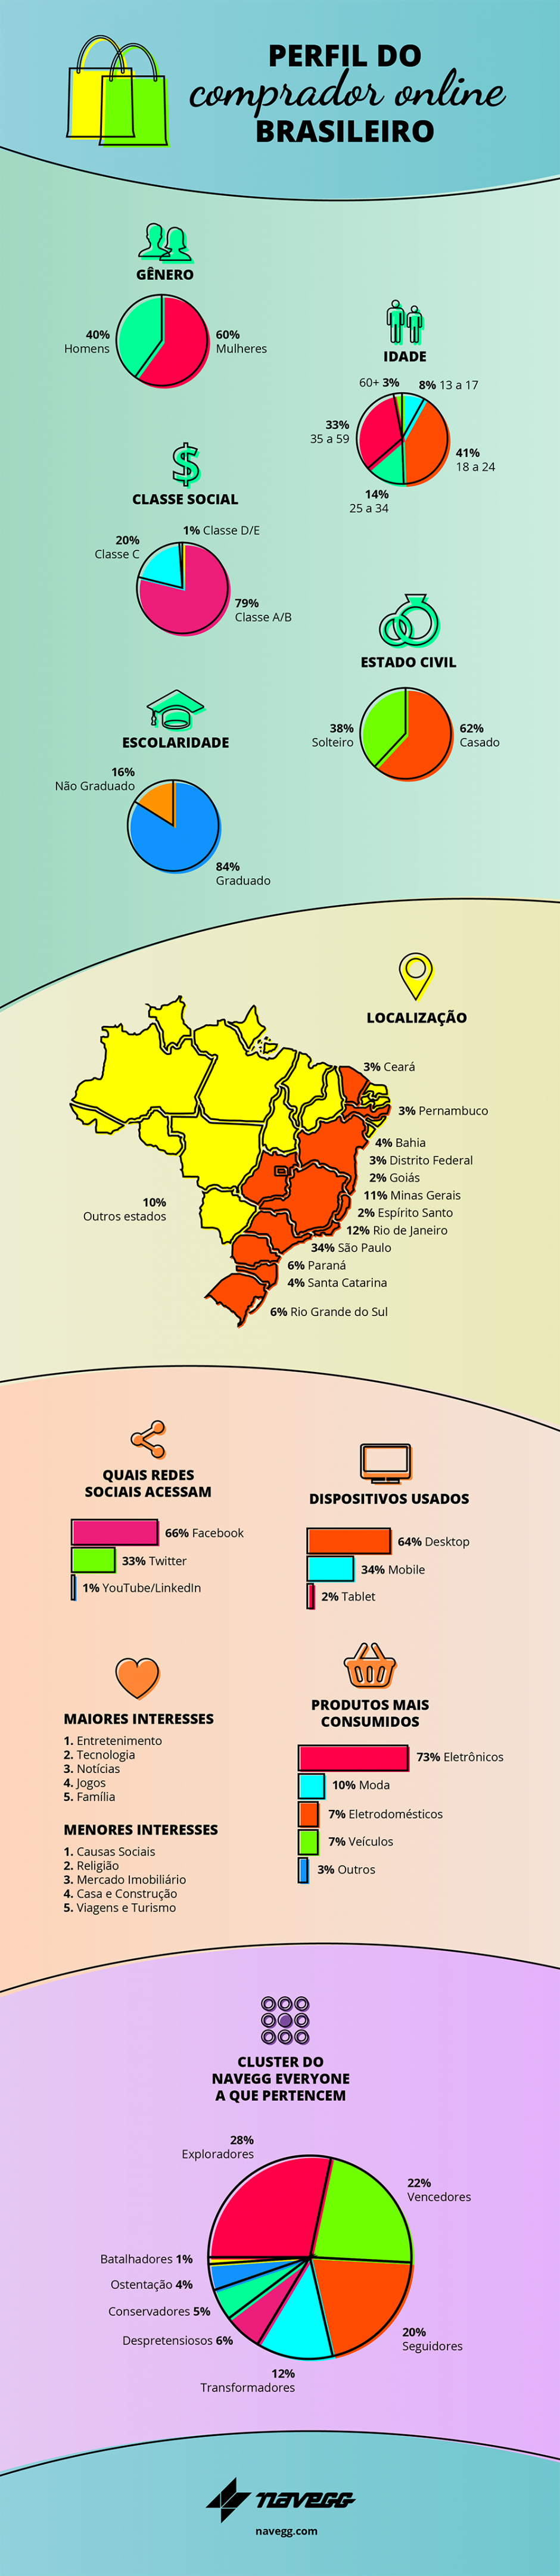 infografico-perfil-comprador-online-brasileiro-navegg